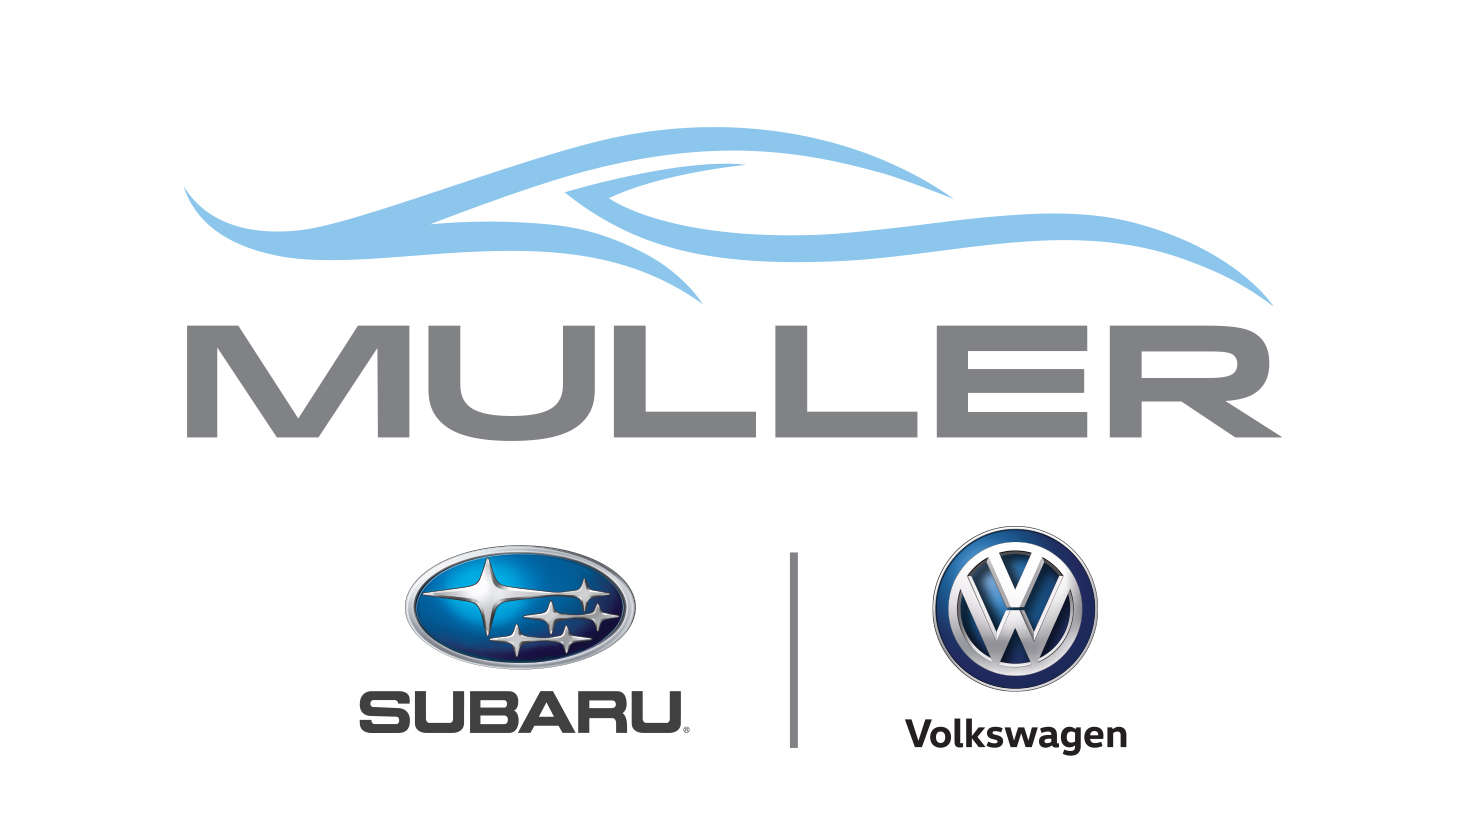 Muller Subaru Volkswagen Logo